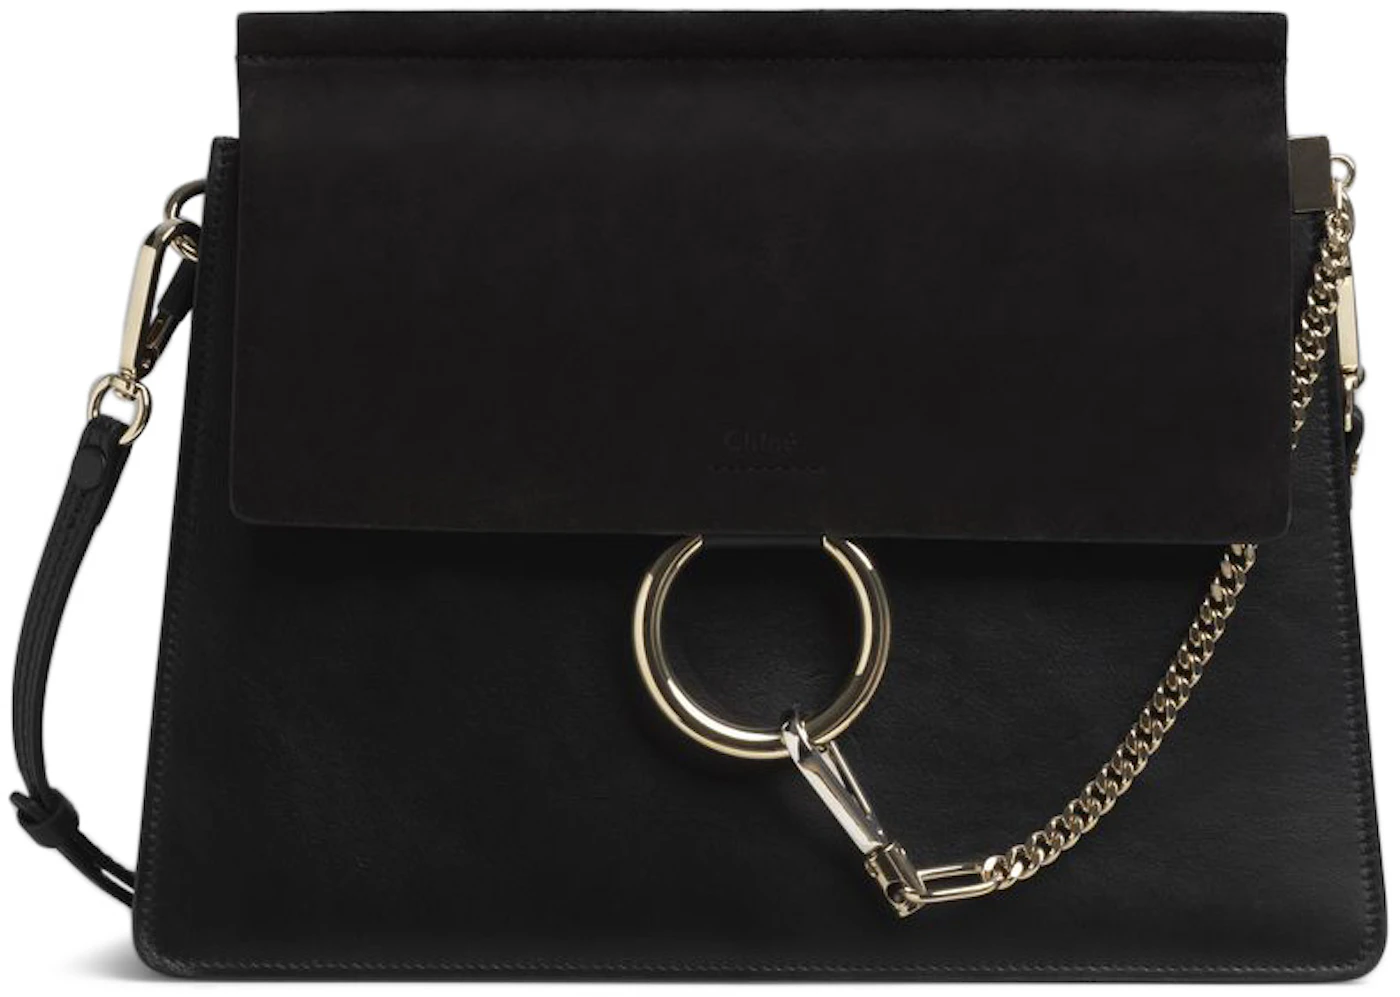 Chloe Faye Crossbody Bag Mini Black in Calfskin Leather - US